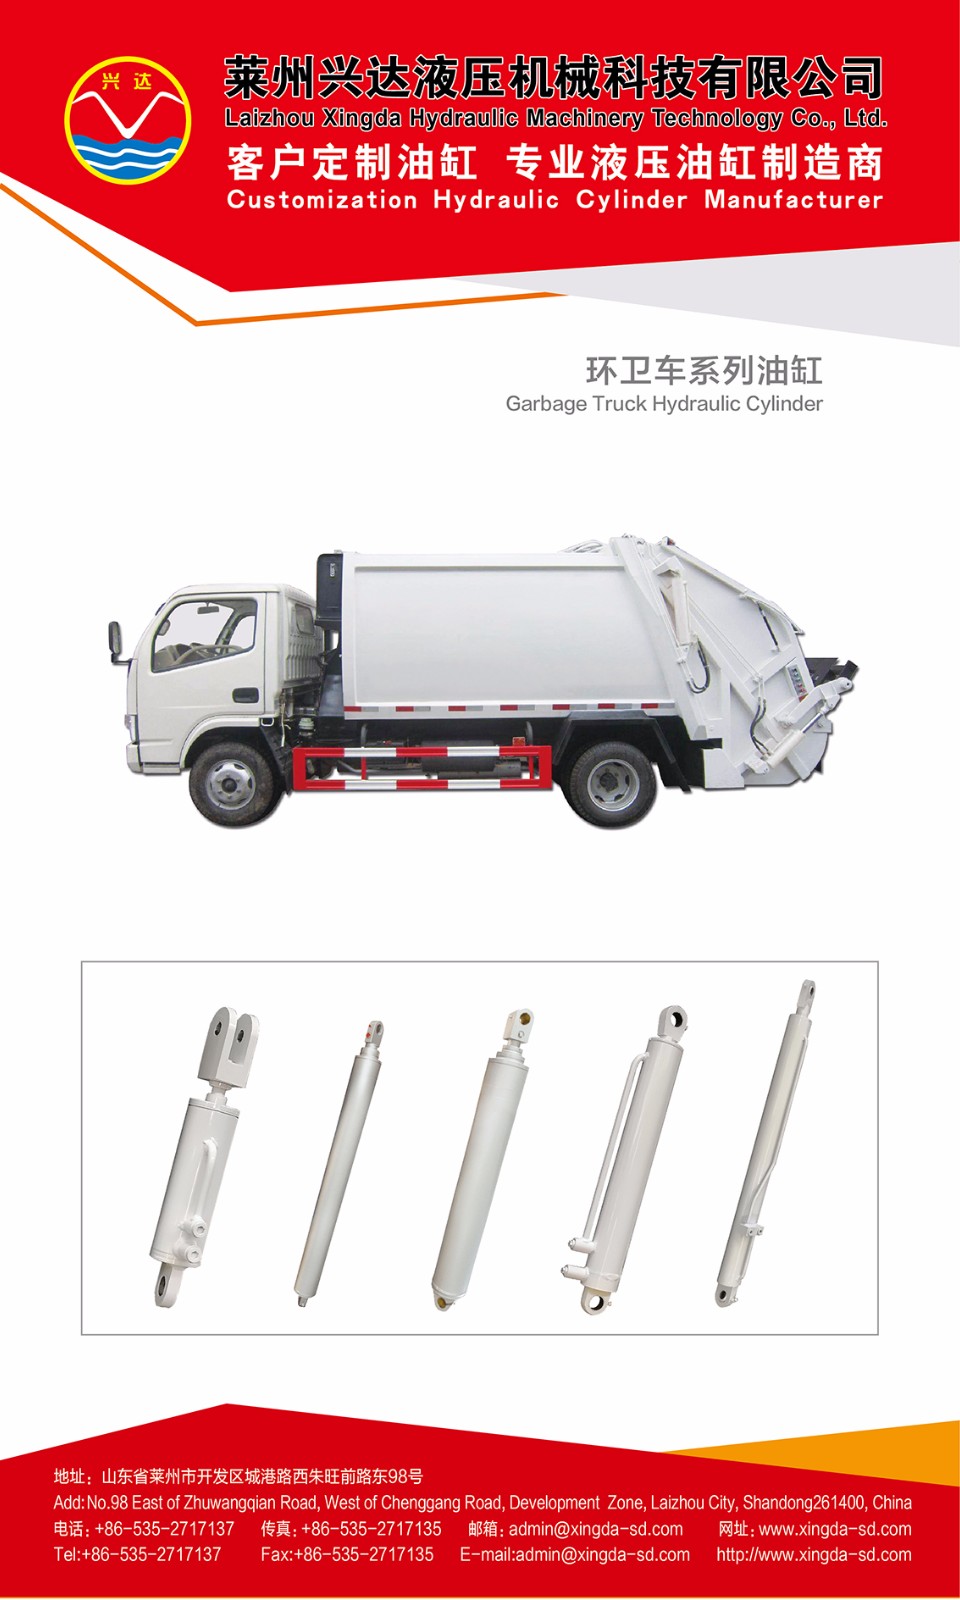 Customization Hydraulic Cylinder for garbage truck